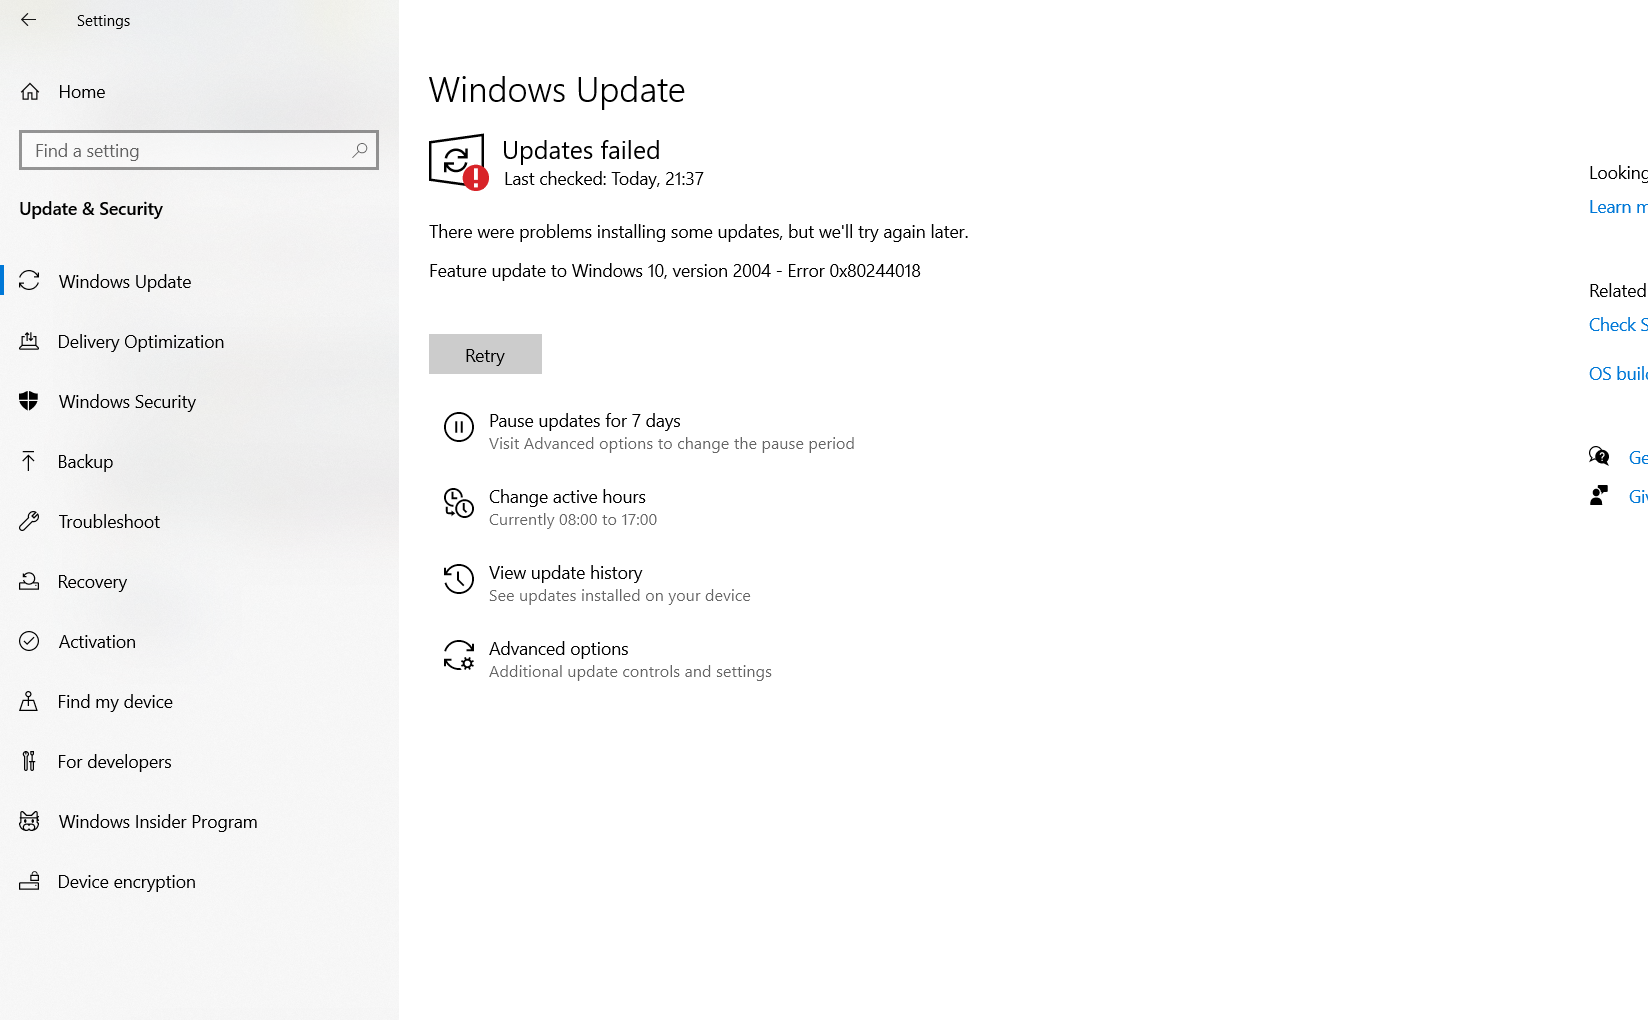 Windows Update failing with error code 0x80244018 when attempting to update to version 2004 53abd86d-c0d6-4de0-8b51-9a8c8b88990e?upload=true.png